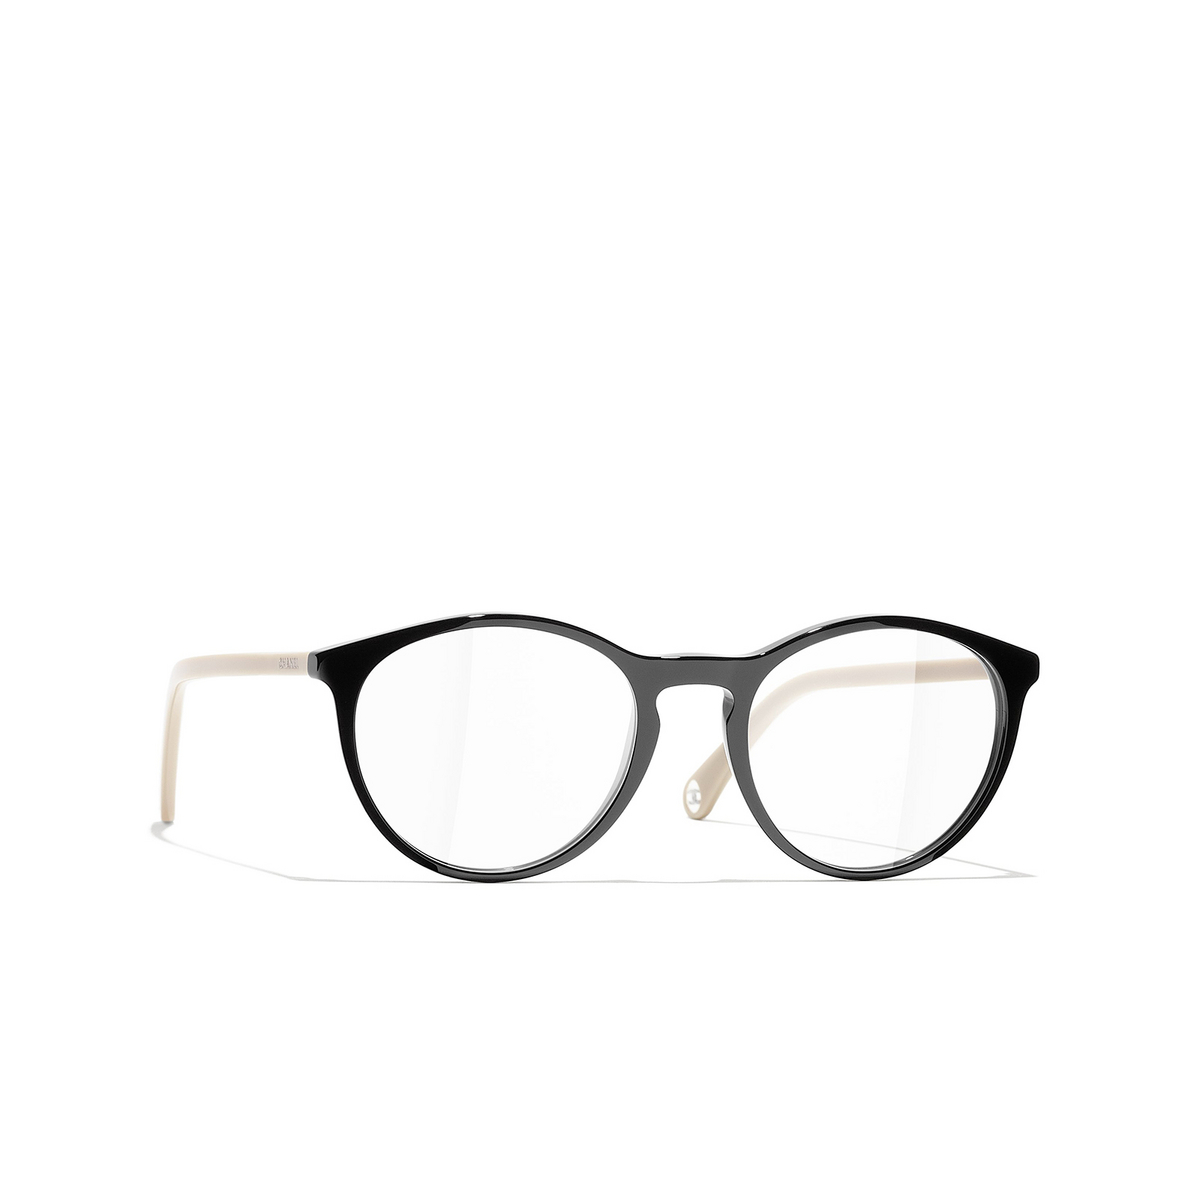 CHANEL pantos Eyeglasses C942 Black & Beige - three-quarters view